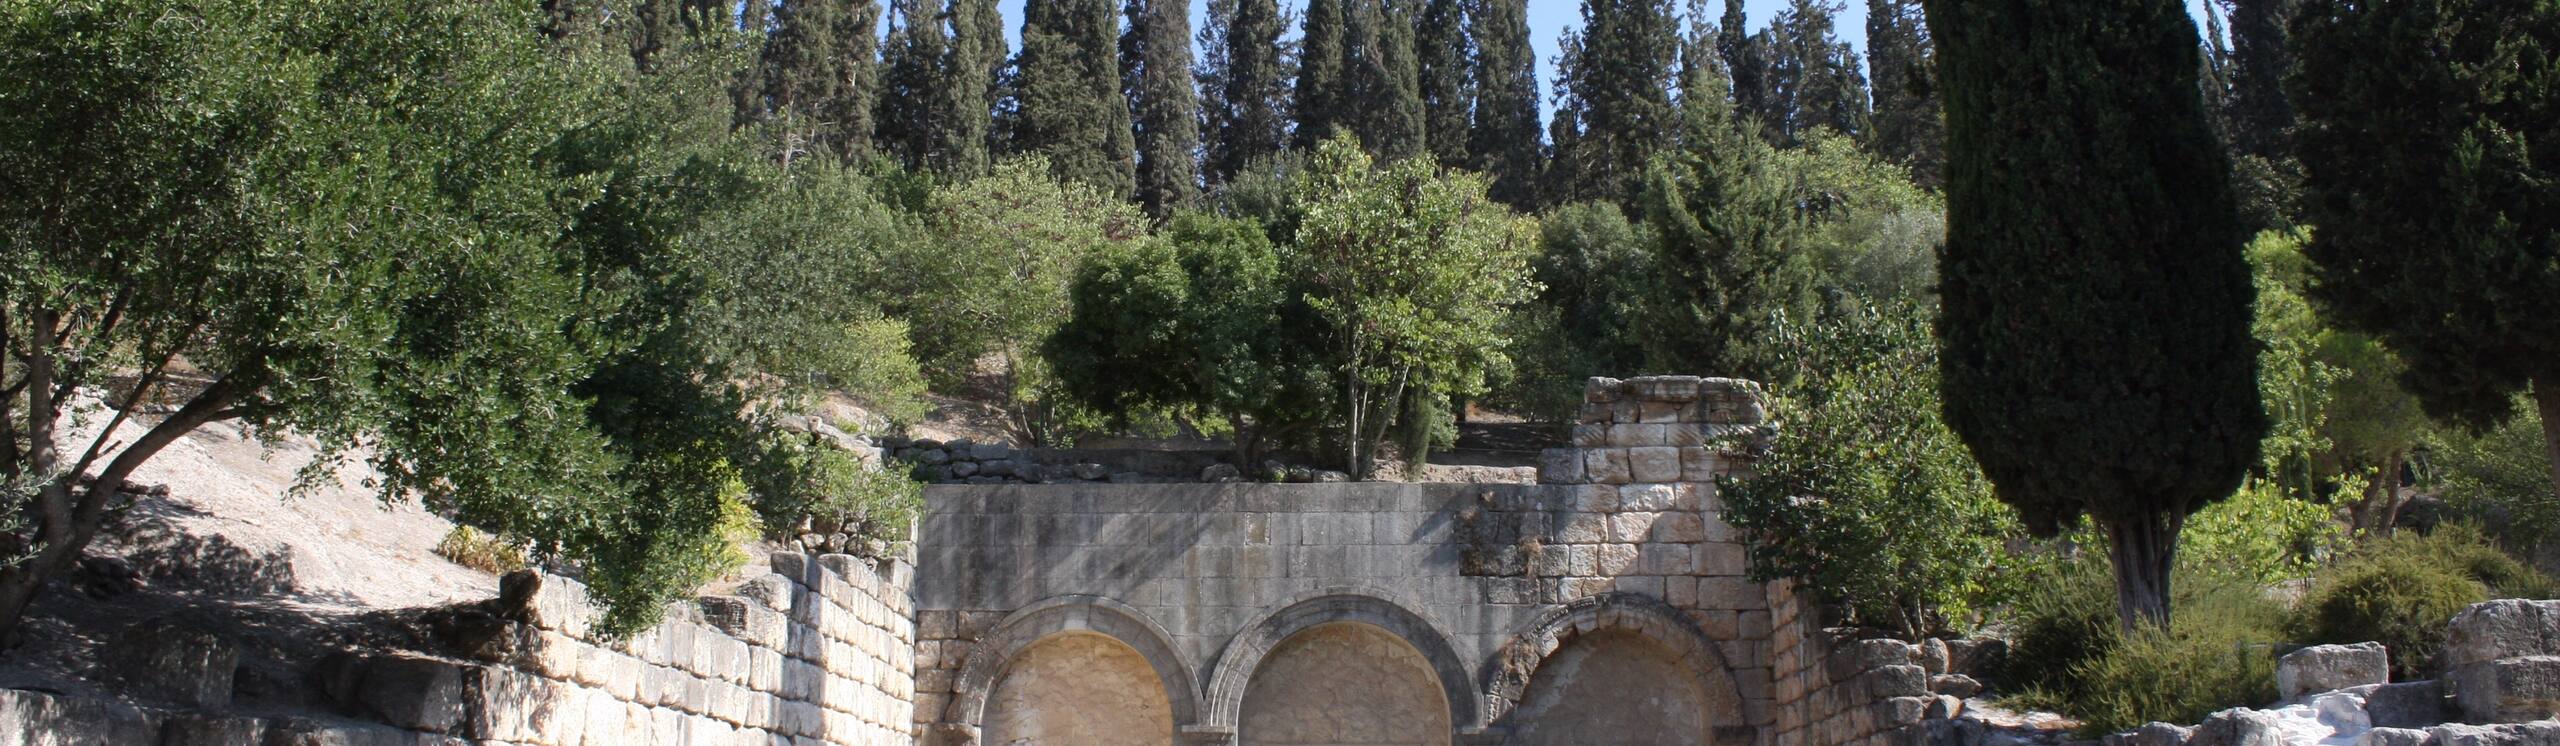 Necropolis of Bet She’arim: A Landmark of Jewish Renewal